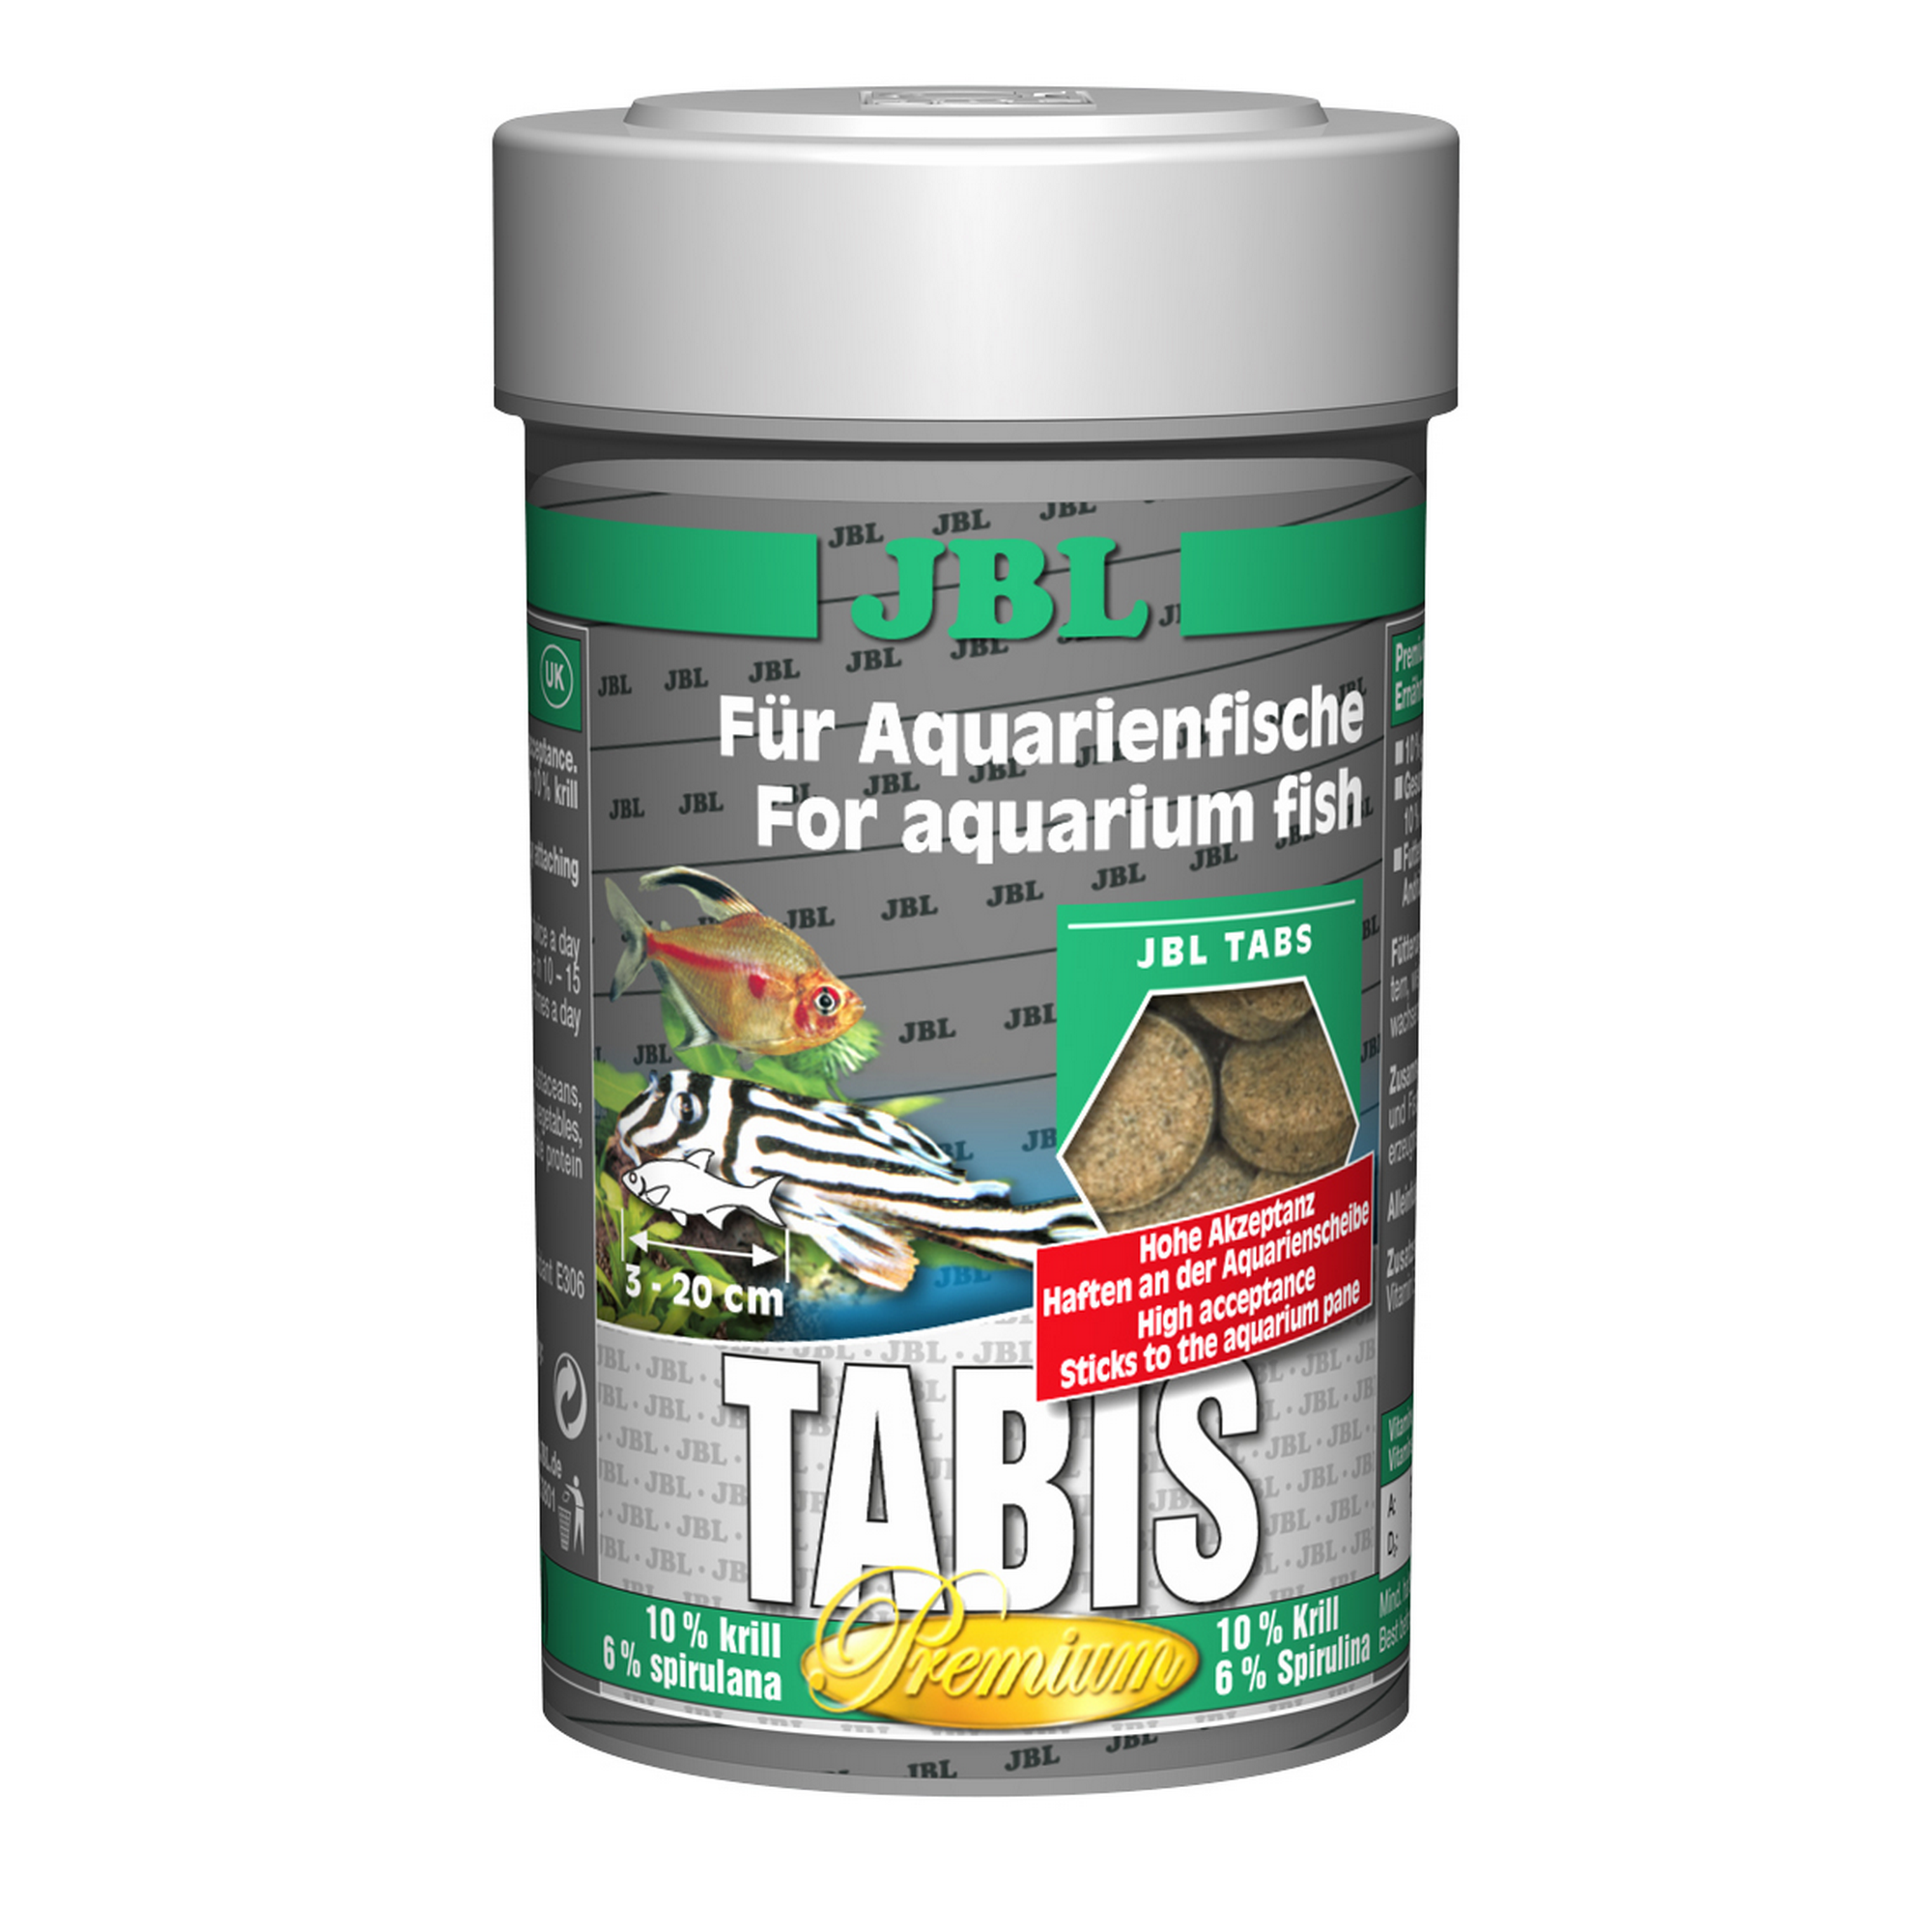 Tabis Premium Für Aquarienfische 100 ml + product picture